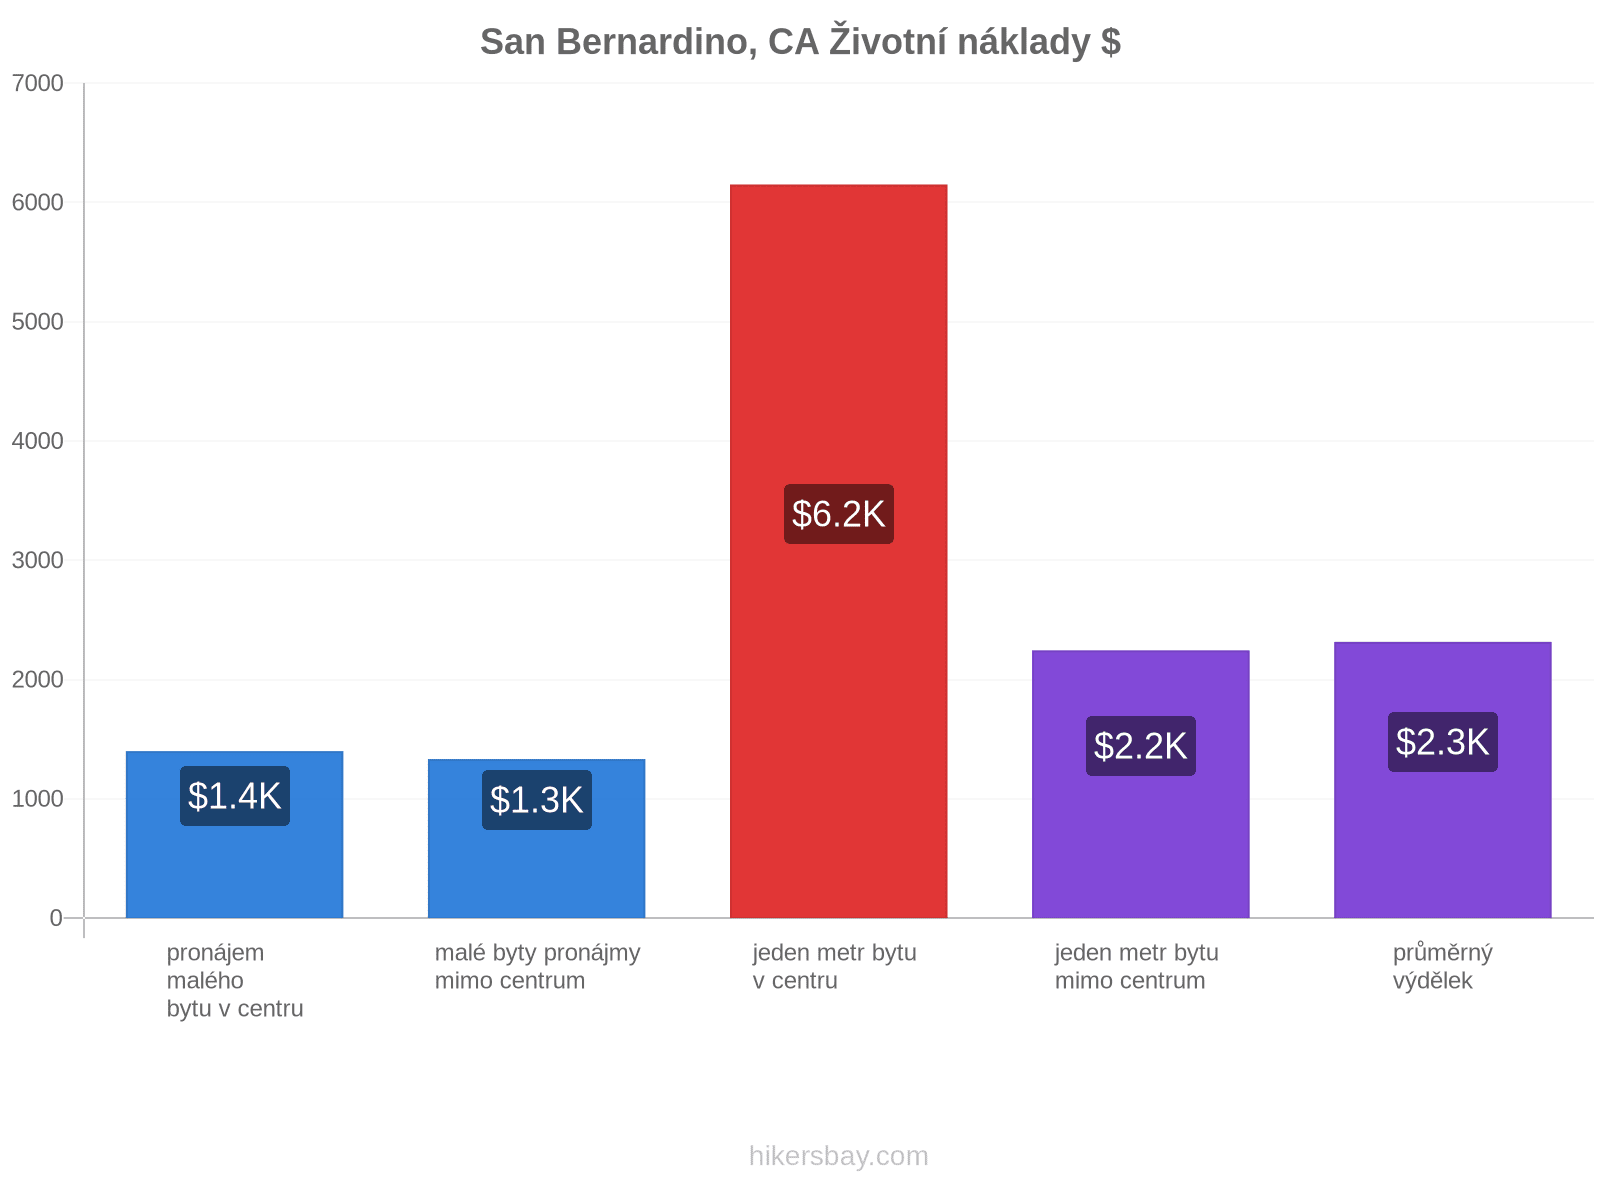 San Bernardino, CA životní náklady hikersbay.com